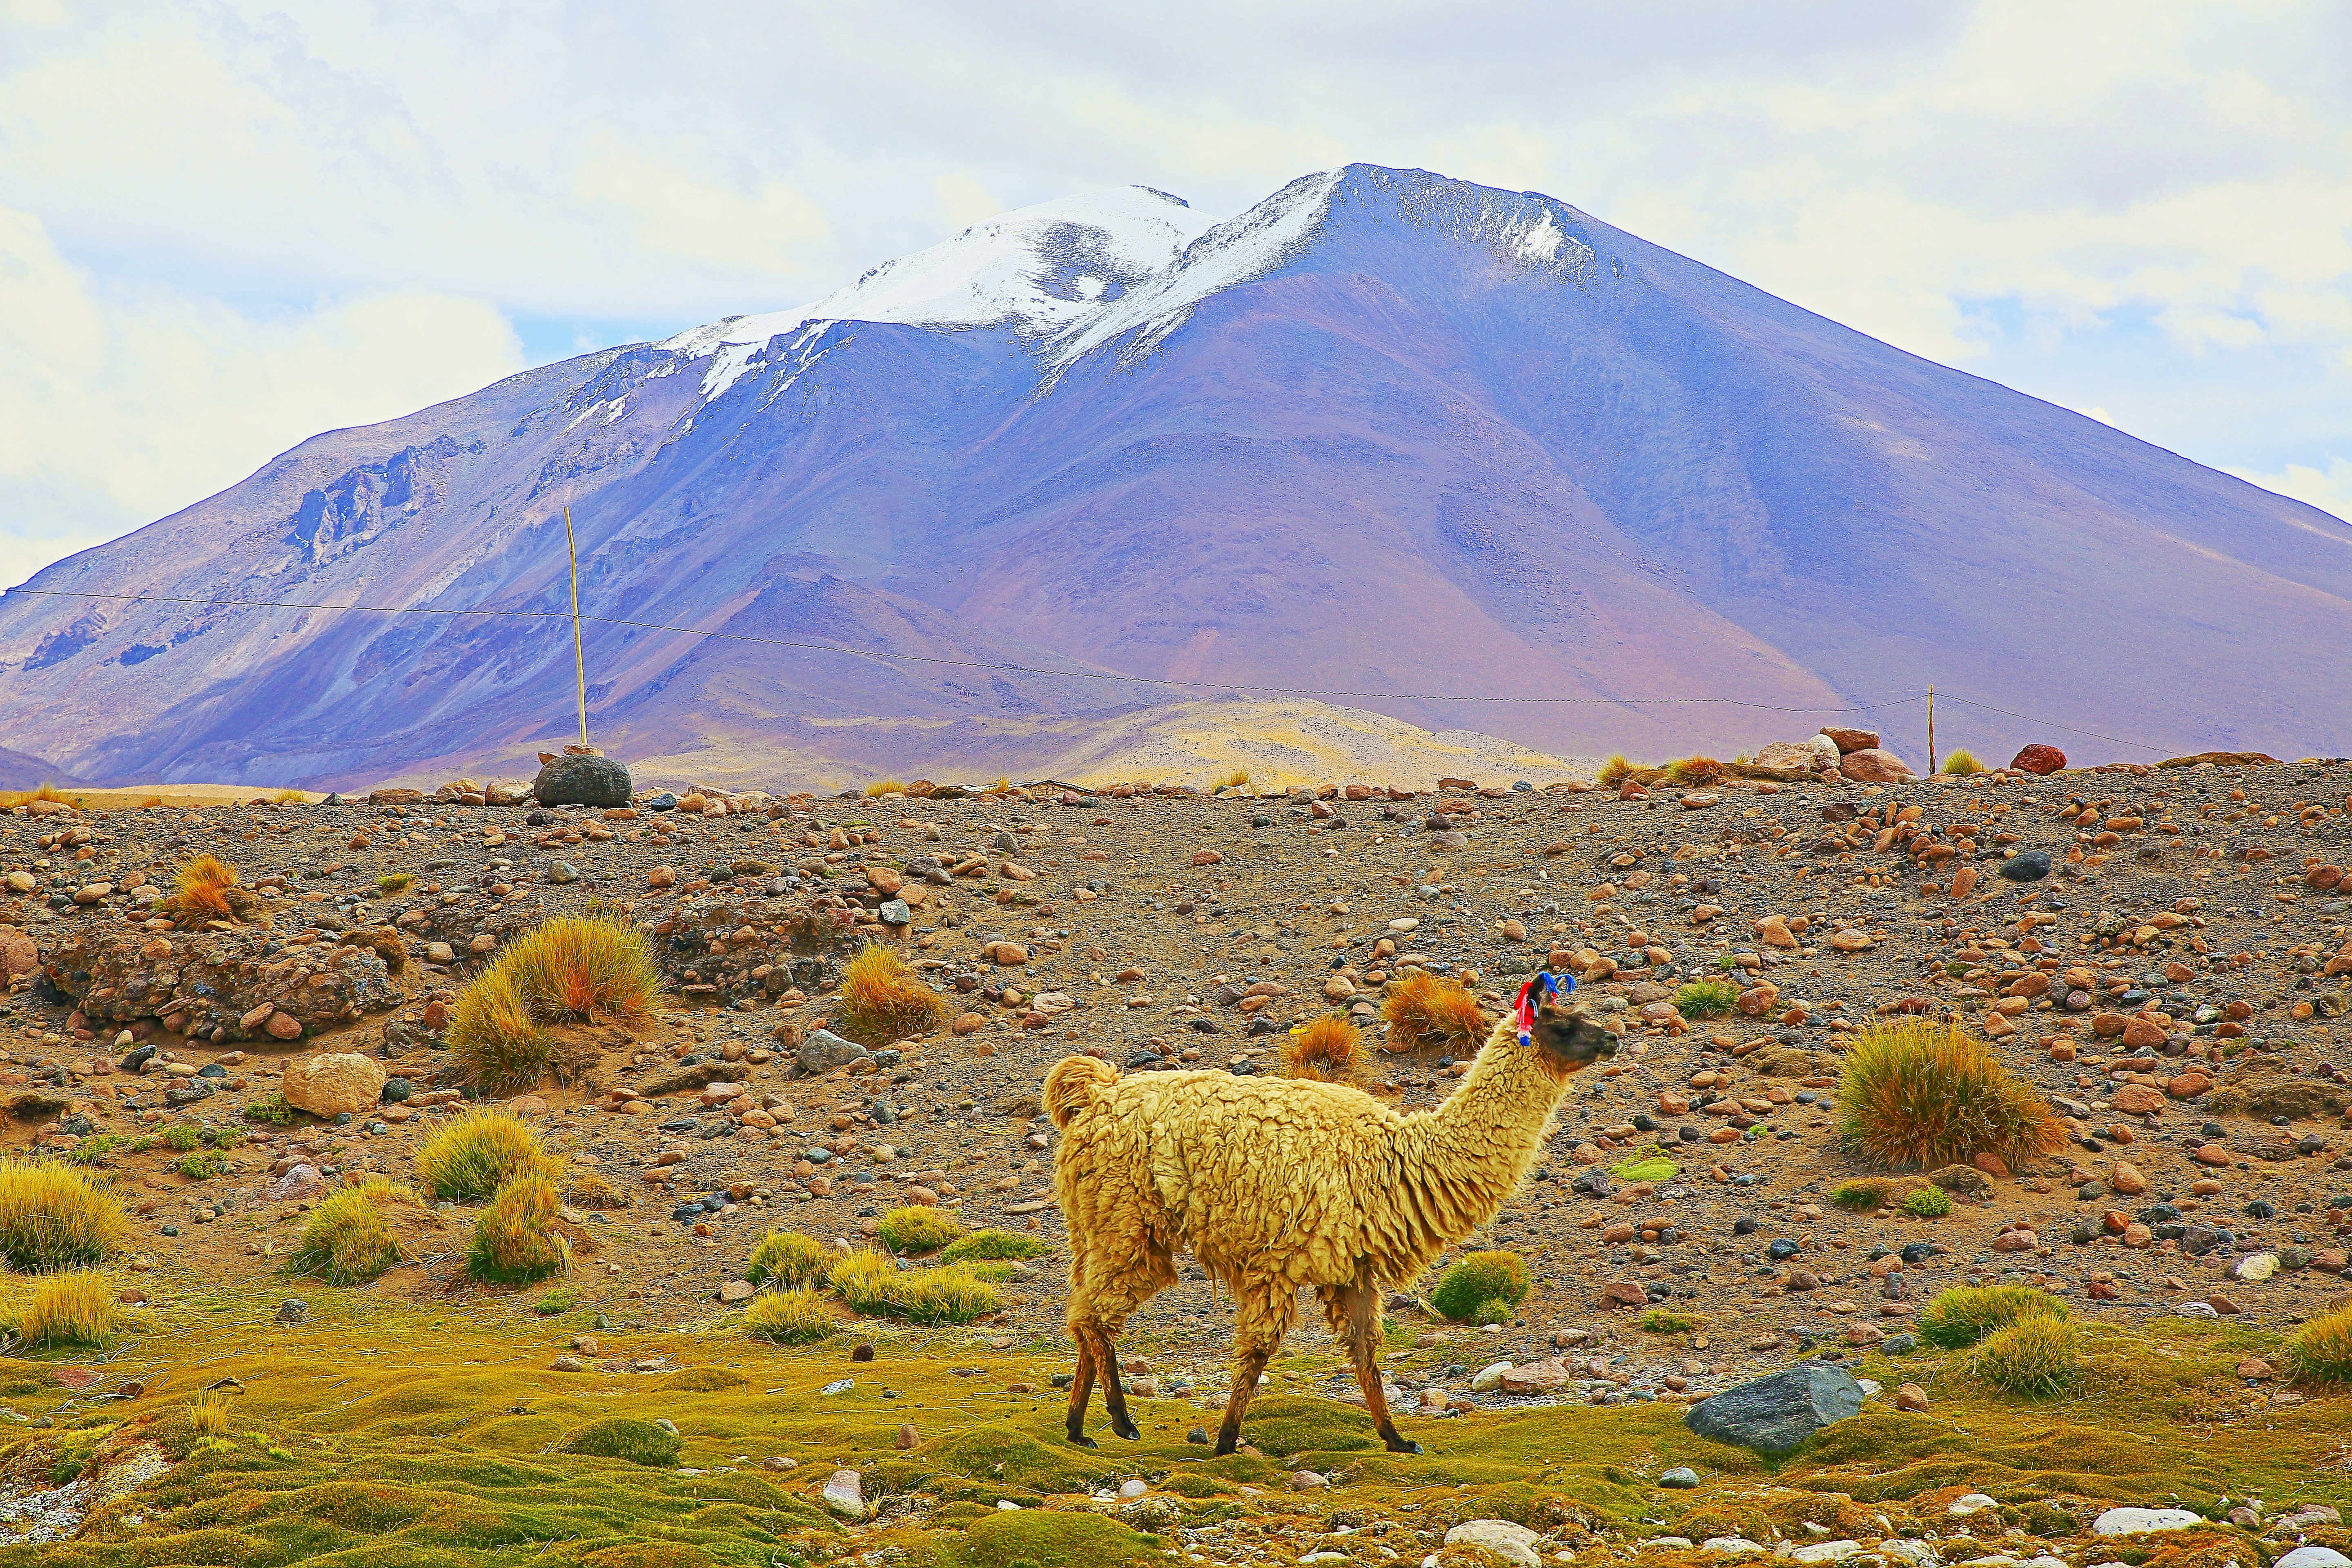 Alpaca andean llama, animal wildlife in Bolivian Andes altiplano and Idyllic Atacama Desert, Volcanic landscape panorama – Potosi region, Bolivian Andes, Chile, Bolívia and Argentina border